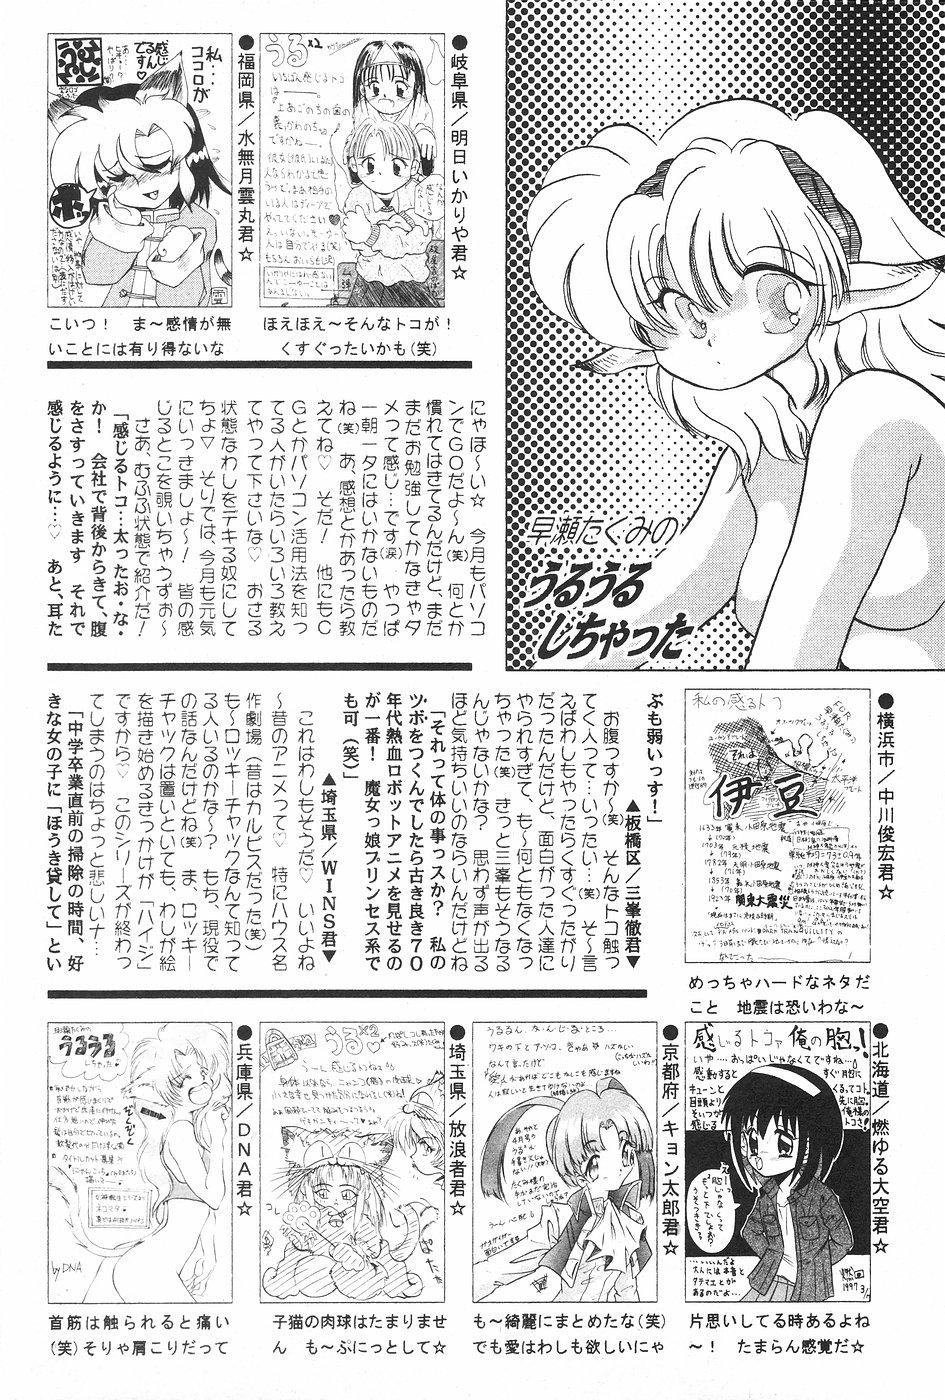 Manga Hotmilk 1997-05 115